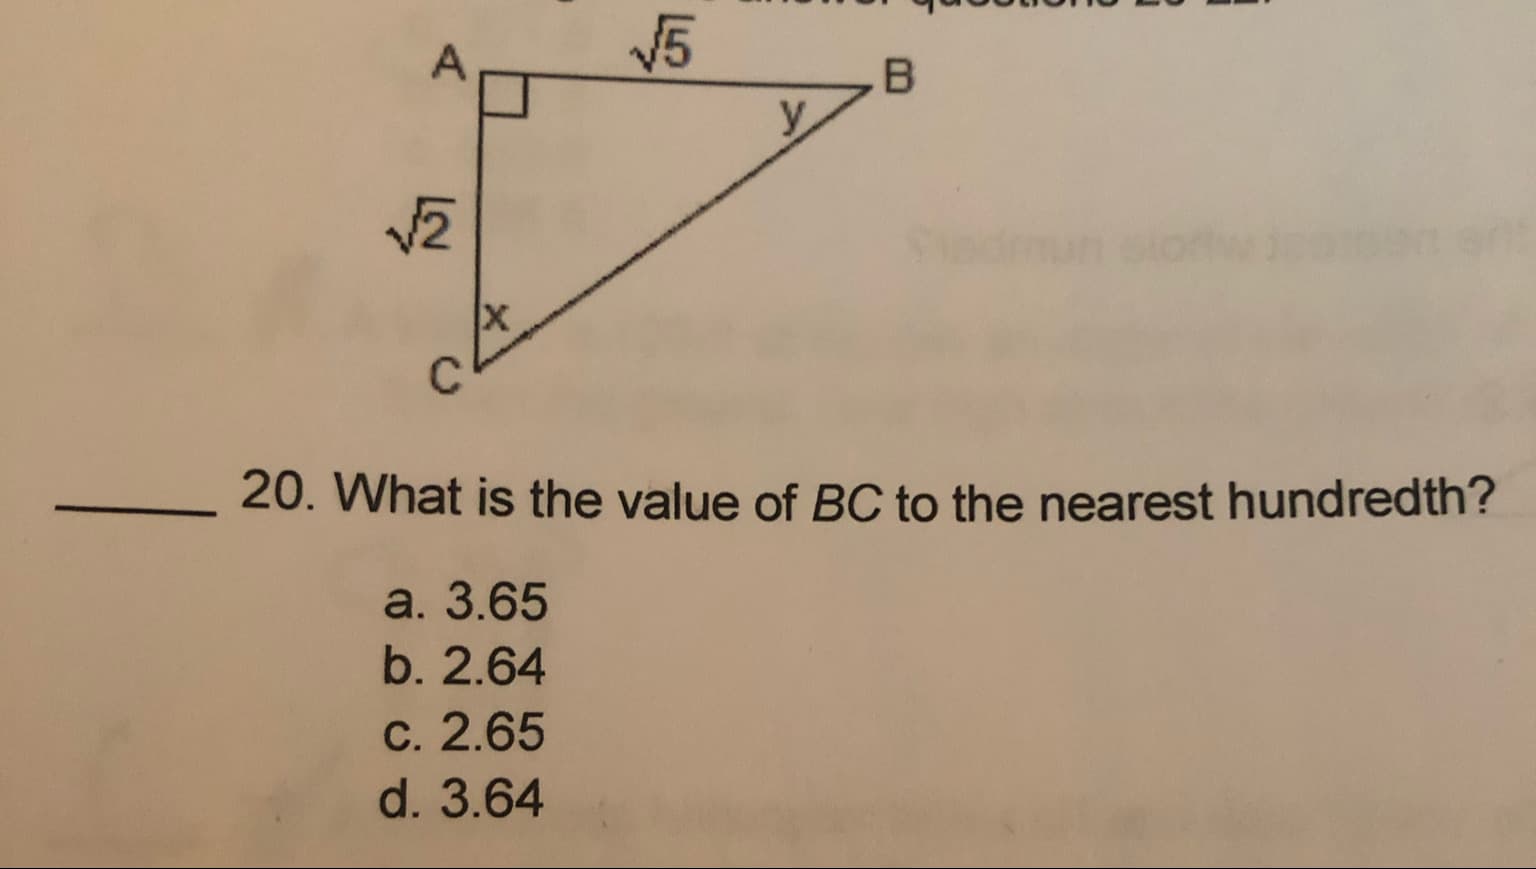 V5
A
B
У
X
20. What is the value of BC to the nearest hundredth?
a. 3.65
b. 2.64
C. 2.65
d. 3.64
